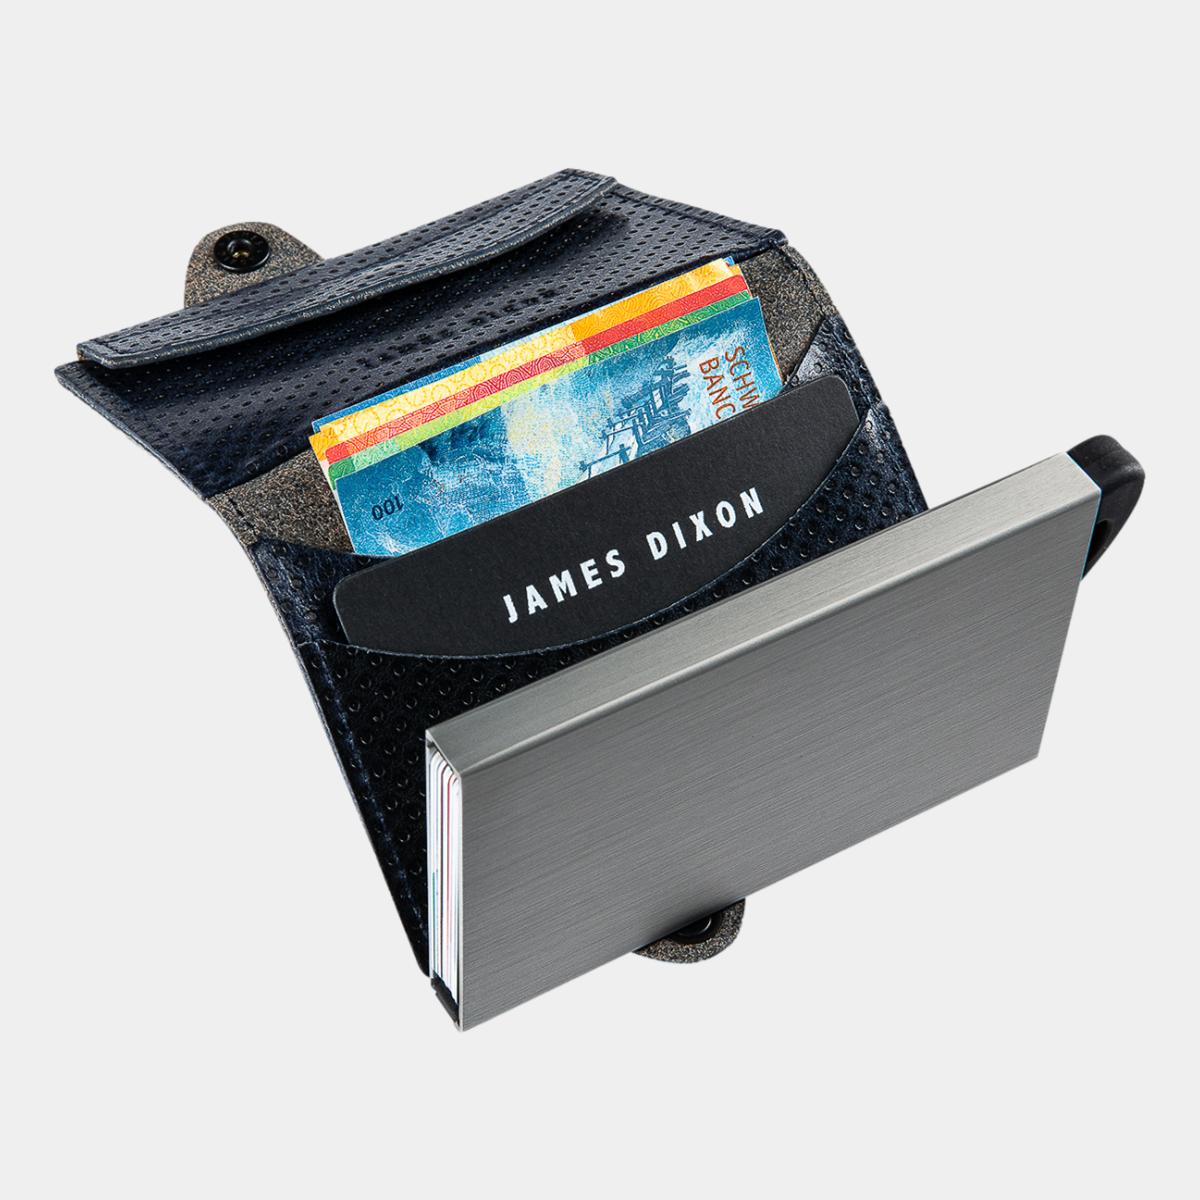 jd0147 james dixon boton racing blue coin pocket wallet notes